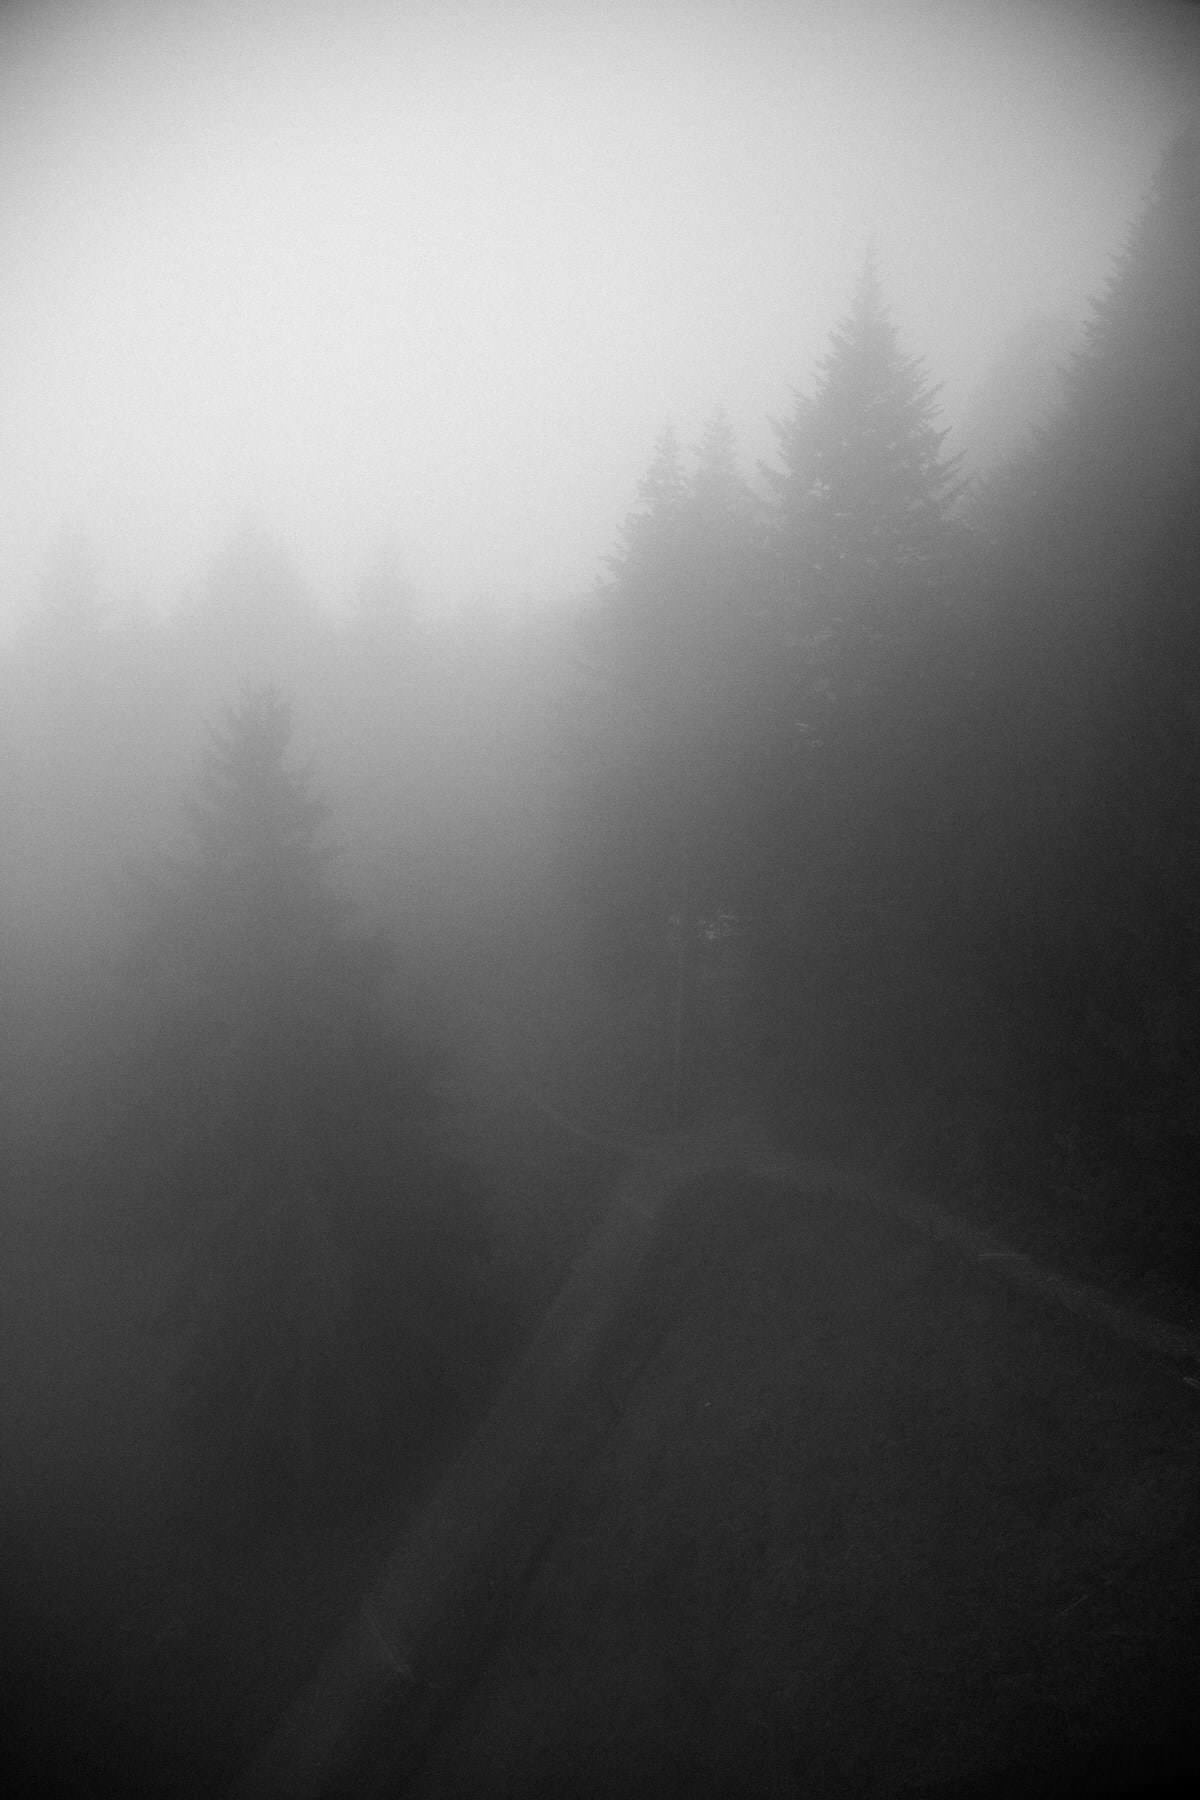 Mount_Pilatus_Lucerne_Switzerland-black-and-white-fine-art-photography-by-Studio-L-photographer-Laura-Schneider-_4418